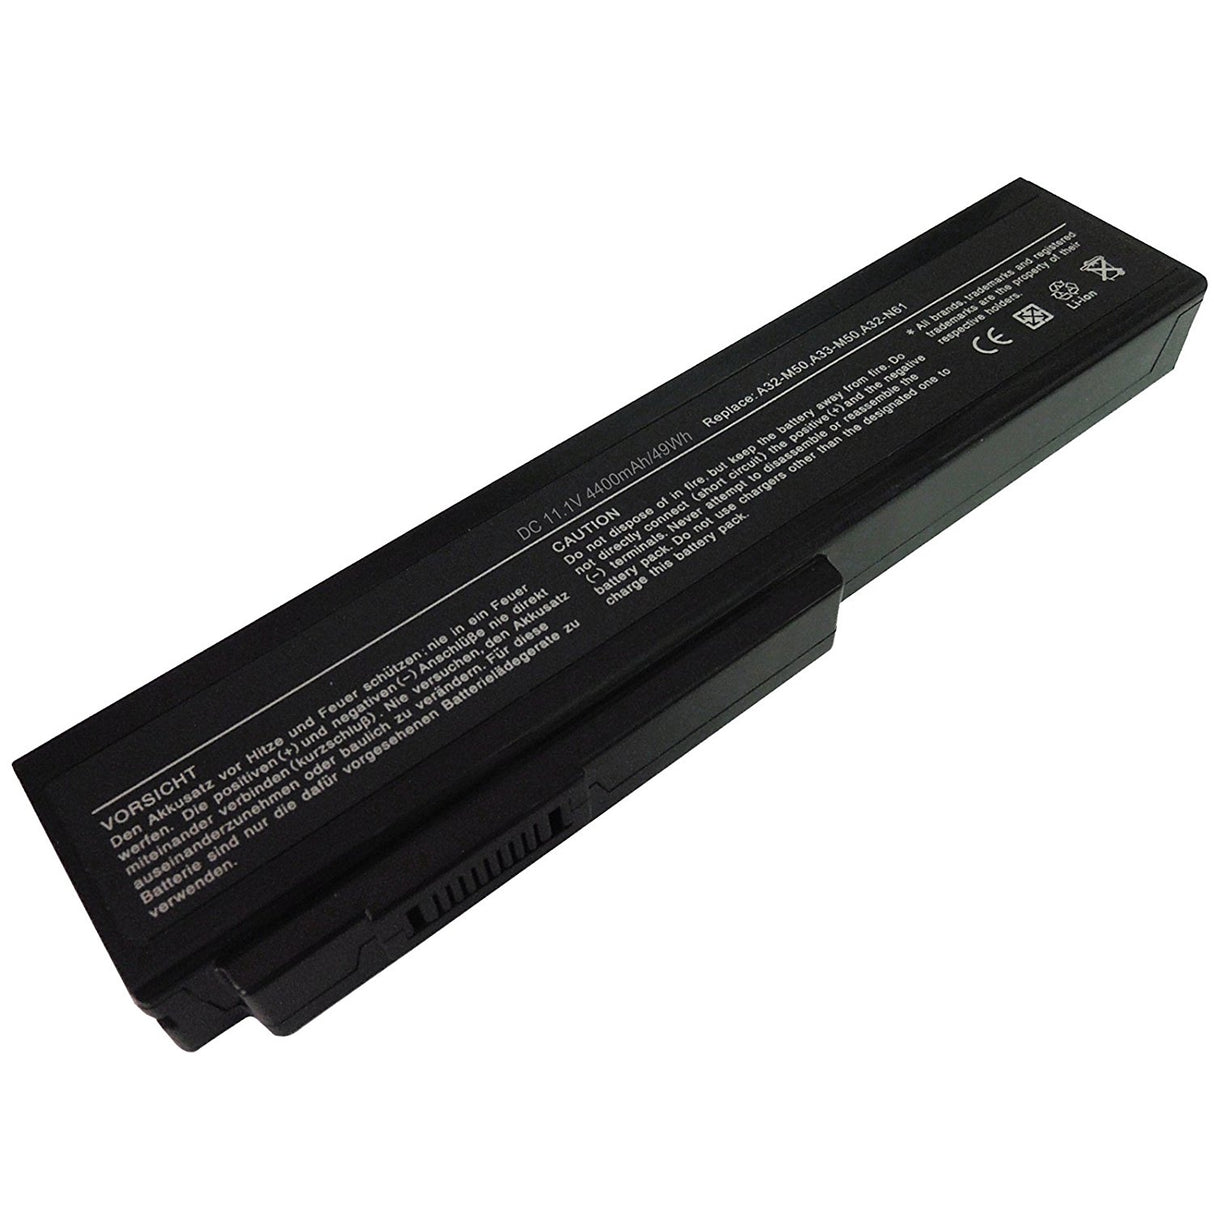 Bateria Compatível para Asus A32-M50 A32-N61 M50L721 A32-X64 4400mAh - Multi4you®